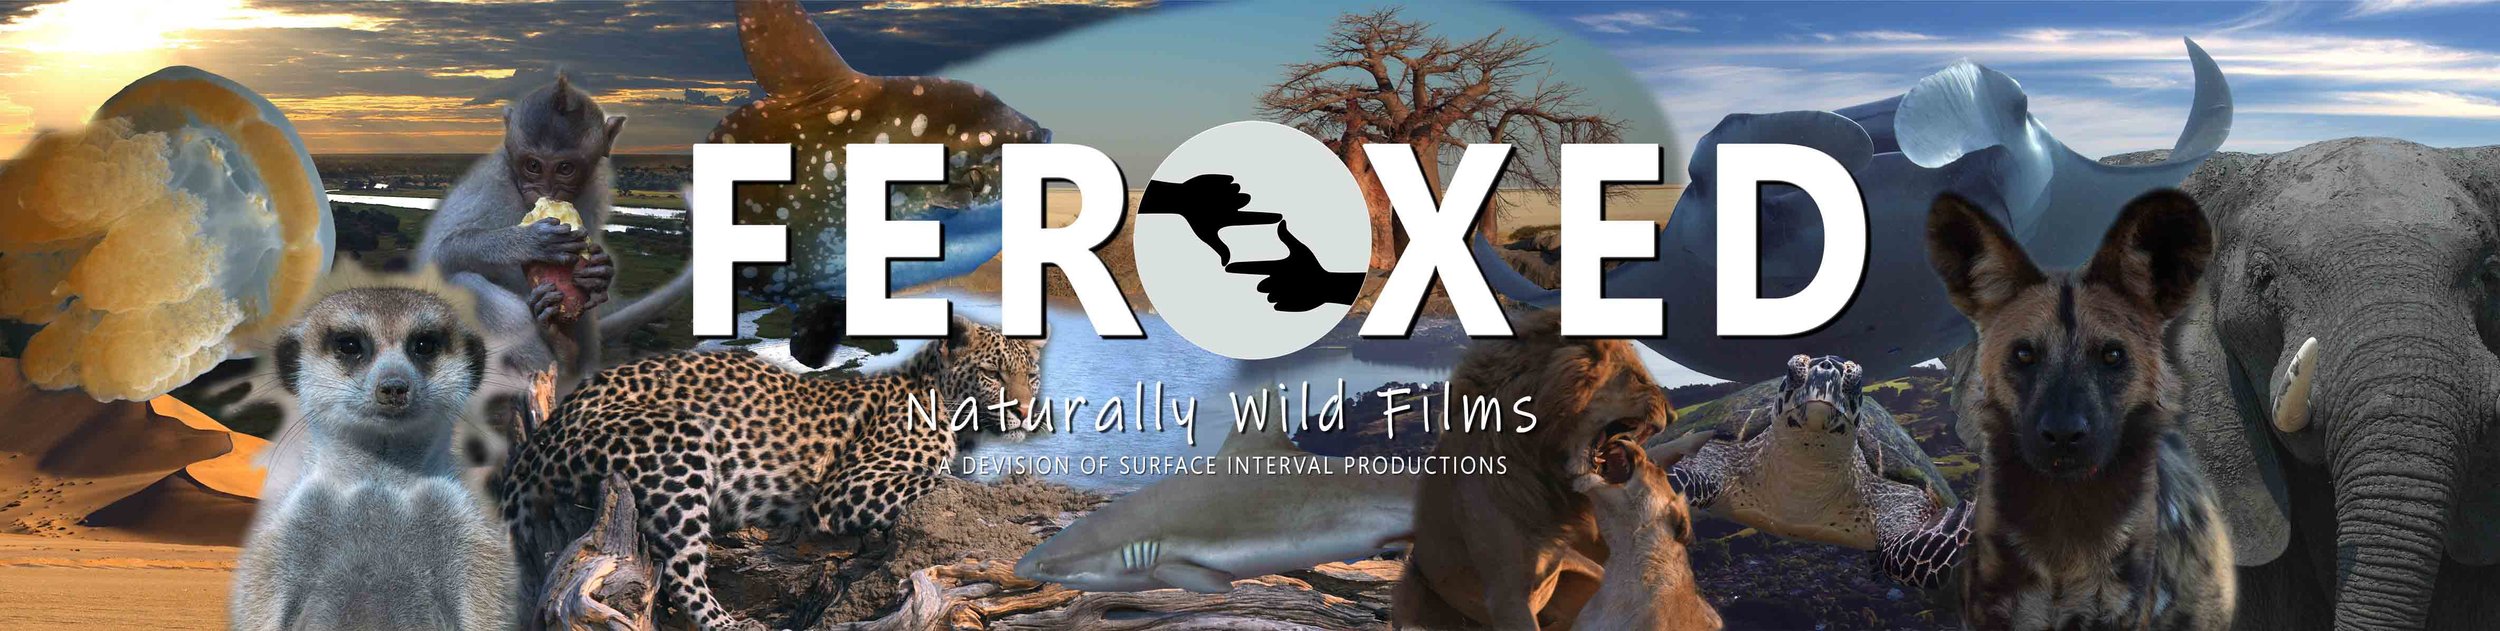 FEROXED - Naturally Wild Films BANNER VERY small.jpg